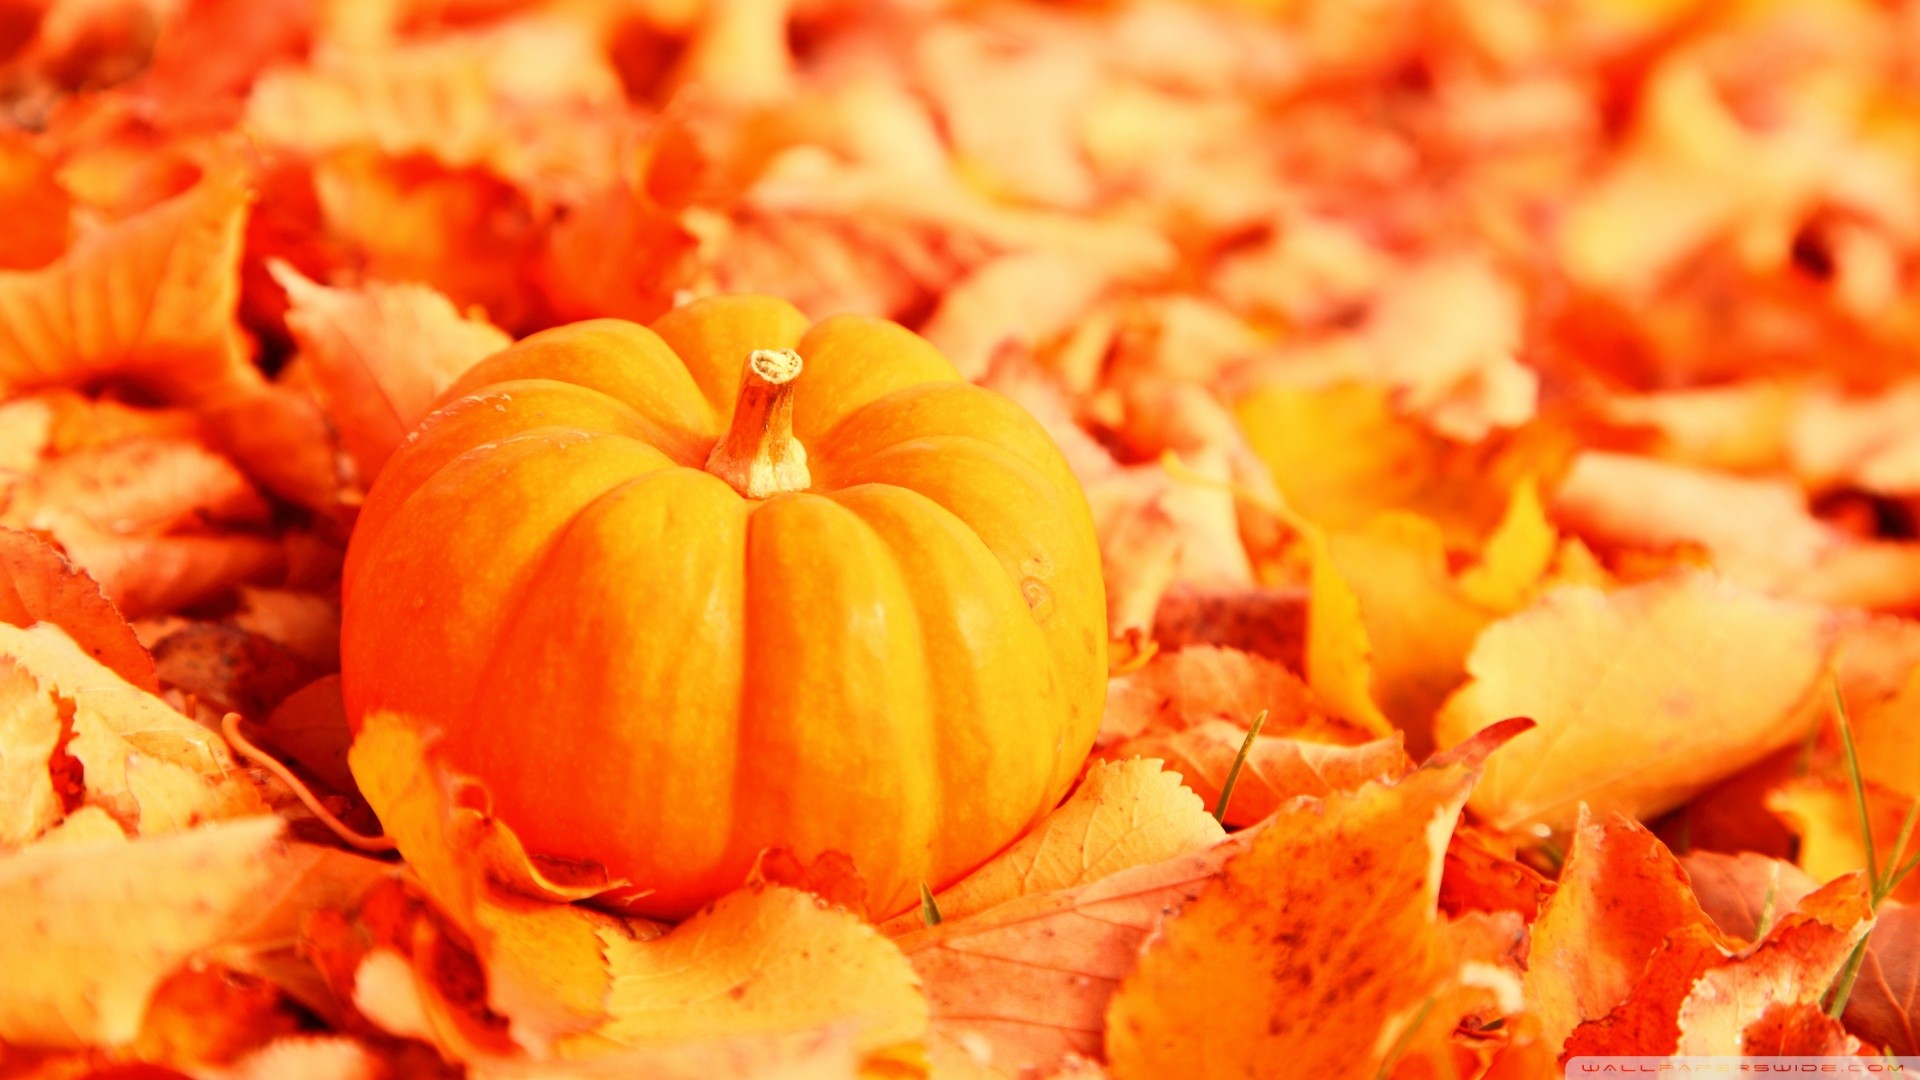 Cute Orange Pumpkins Wallpaper Handphone For Fall Season Background  Wallpaper Image For Free Download  Pngtree